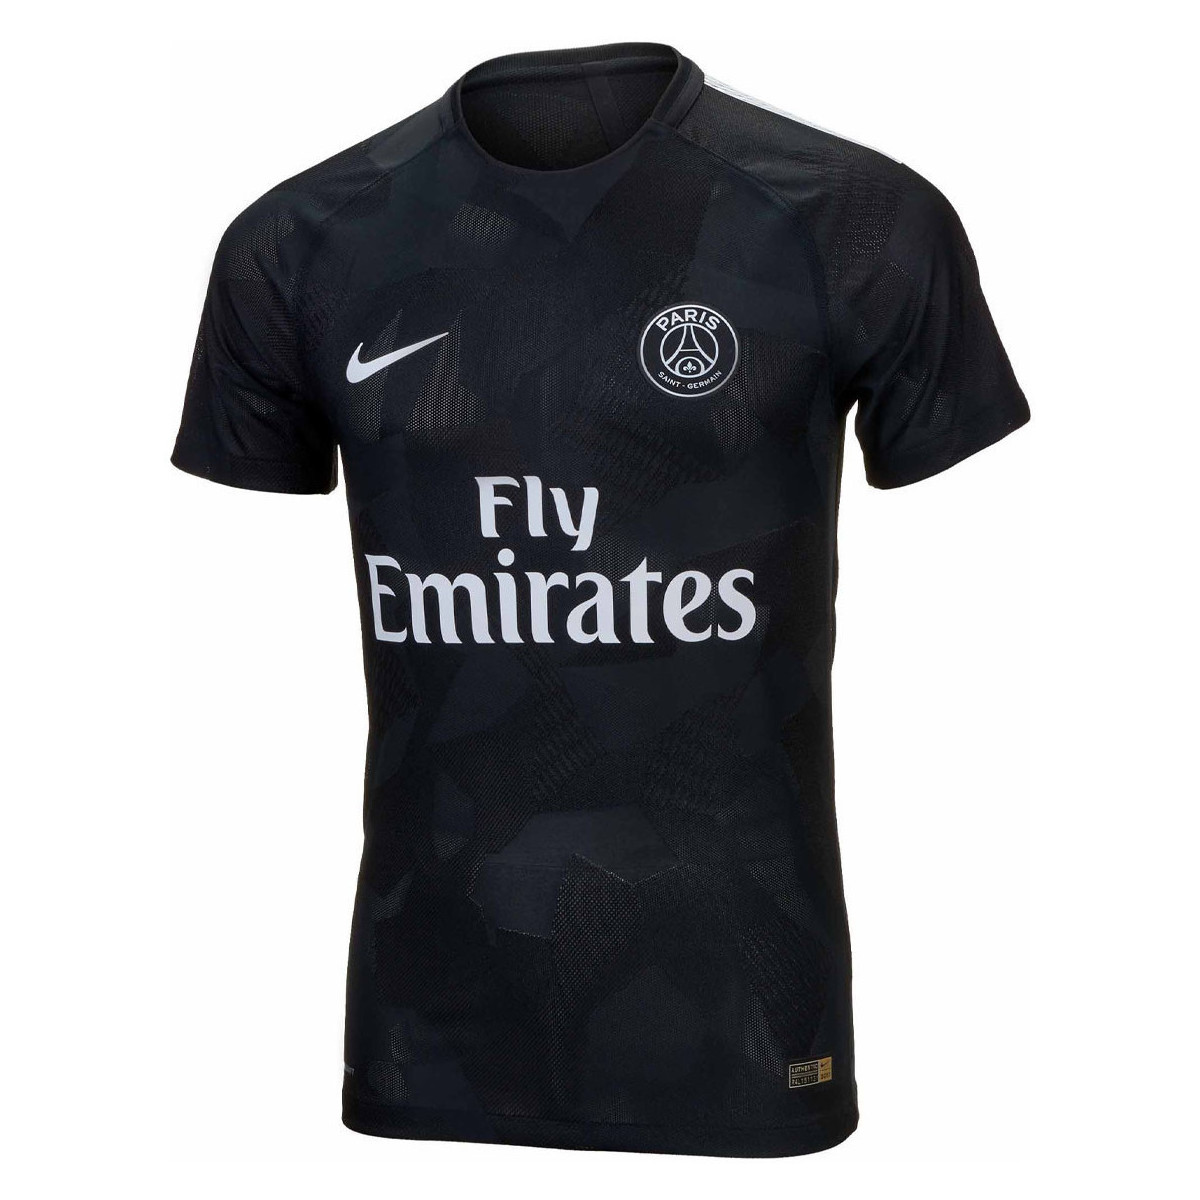 Nike Noir de football PARIS SAINT-GERMAIN VAP yQXG2pzw